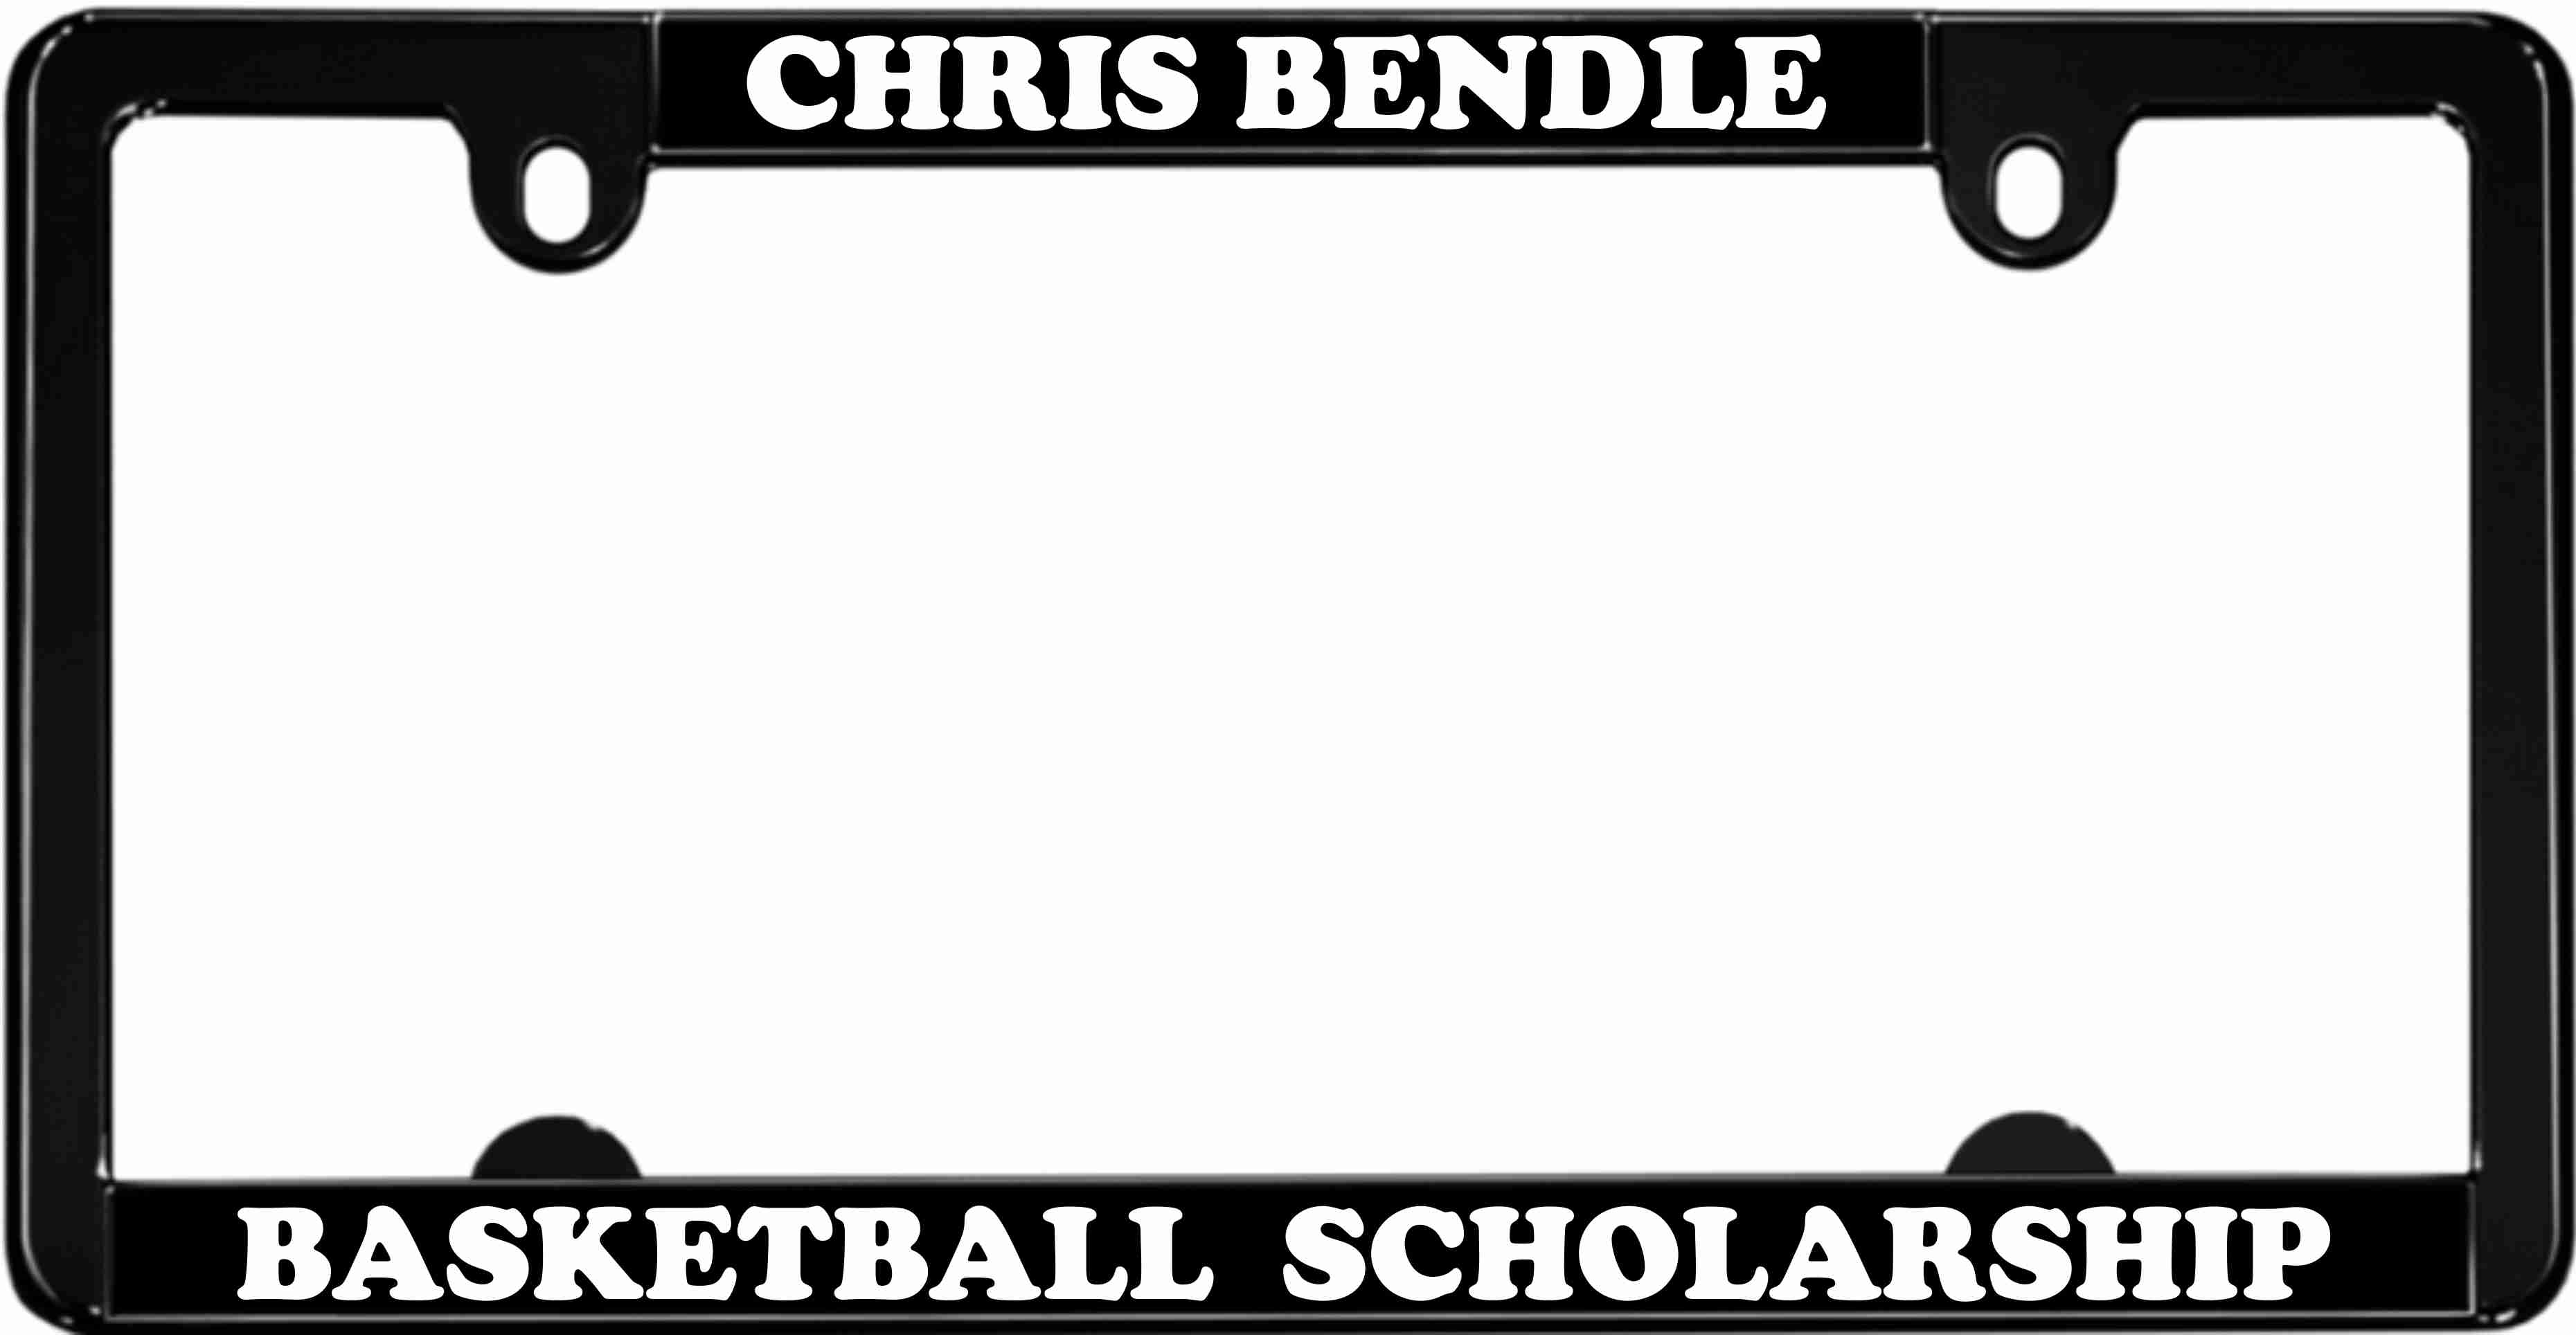 CHRIS BENDLE License plate frame